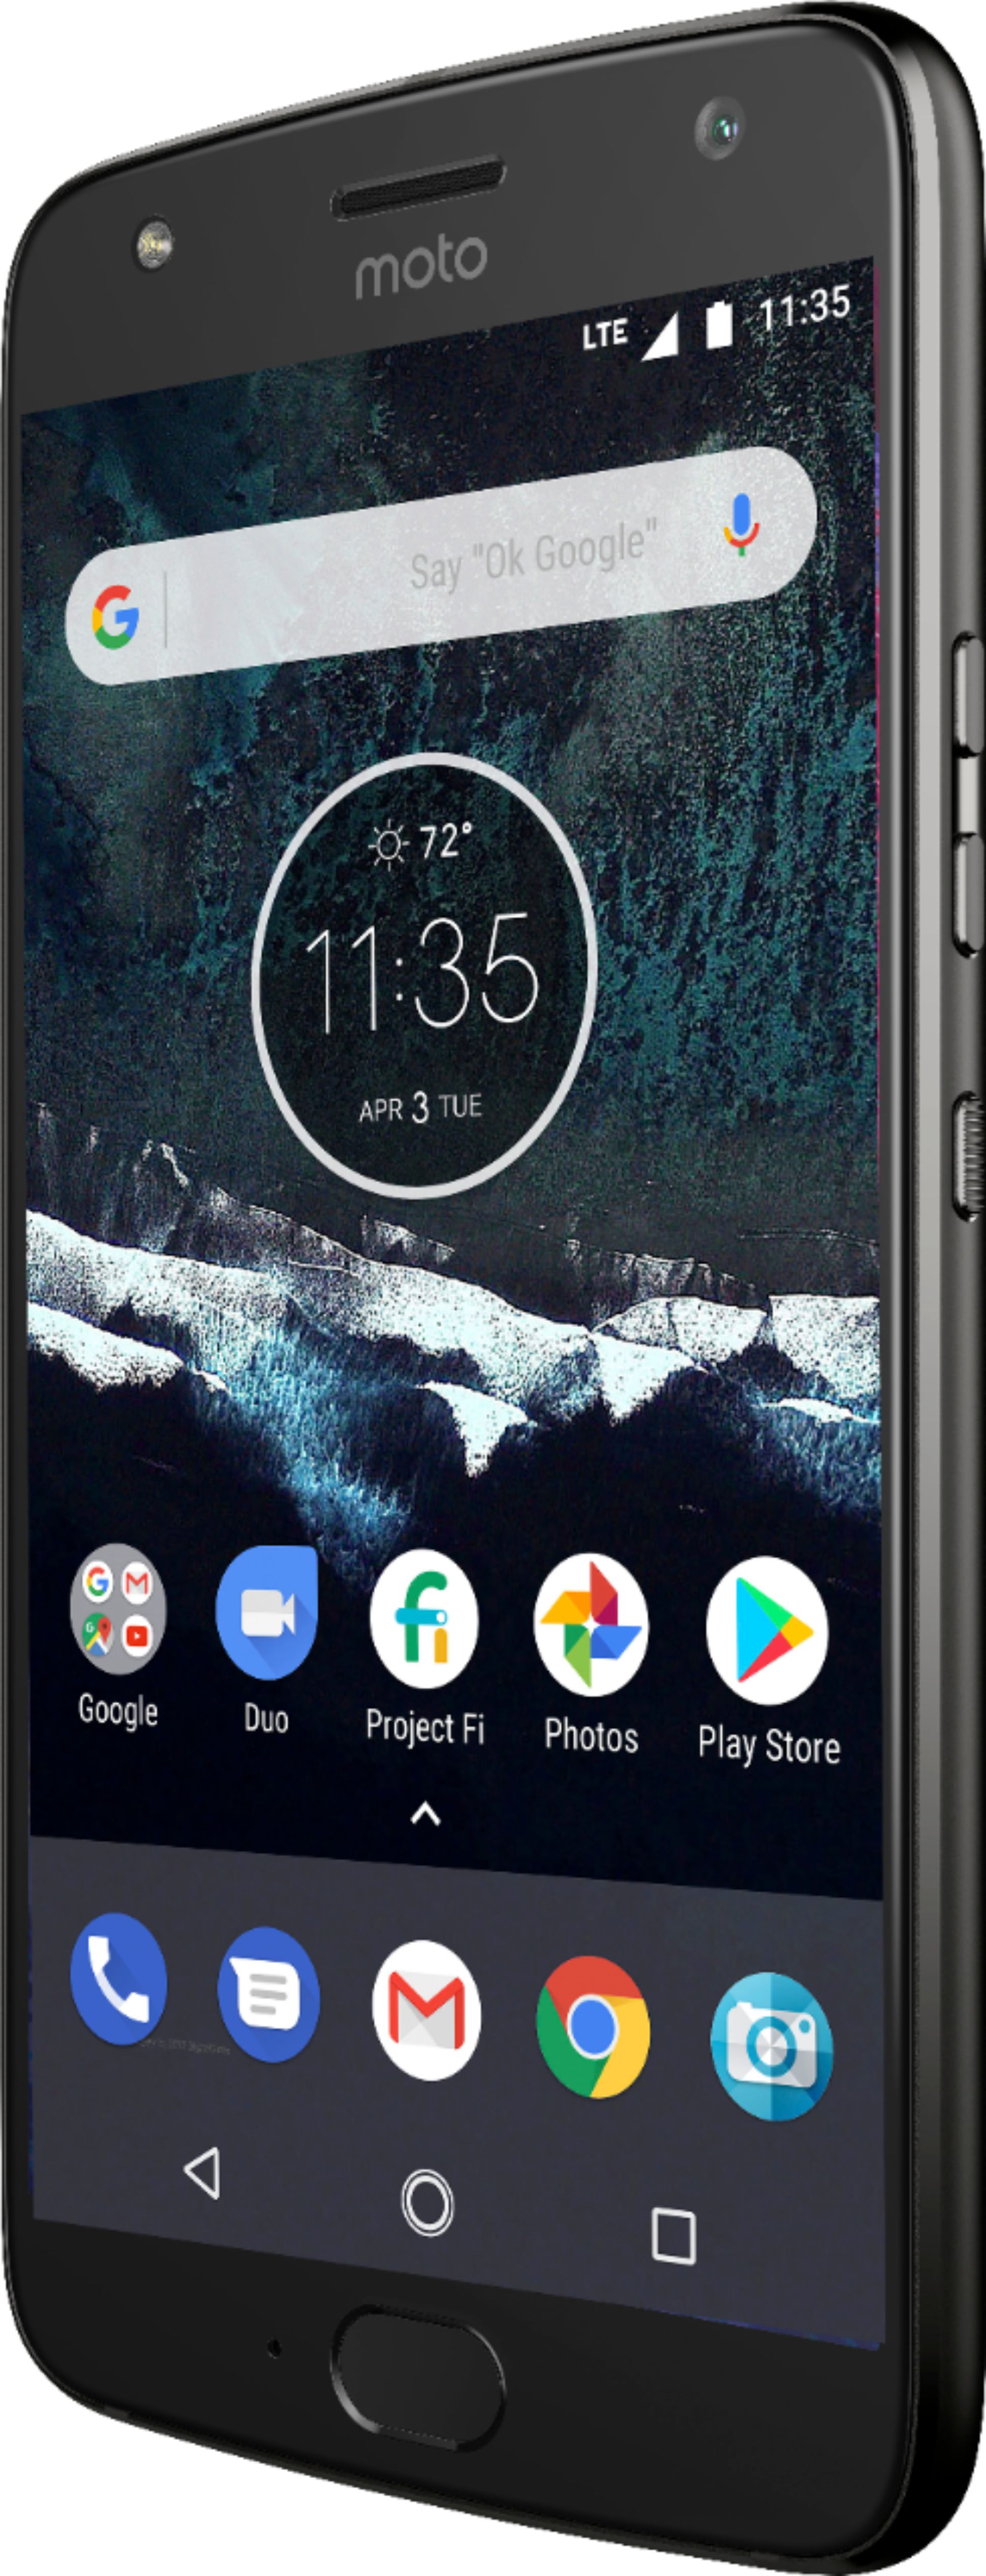 Terugroepen Opstand vitaliteit Best Buy: Motorola Moto X (4th Generation) with 64GB Memory Cell Phone  (Unlocked) Super Black PA8S0019US